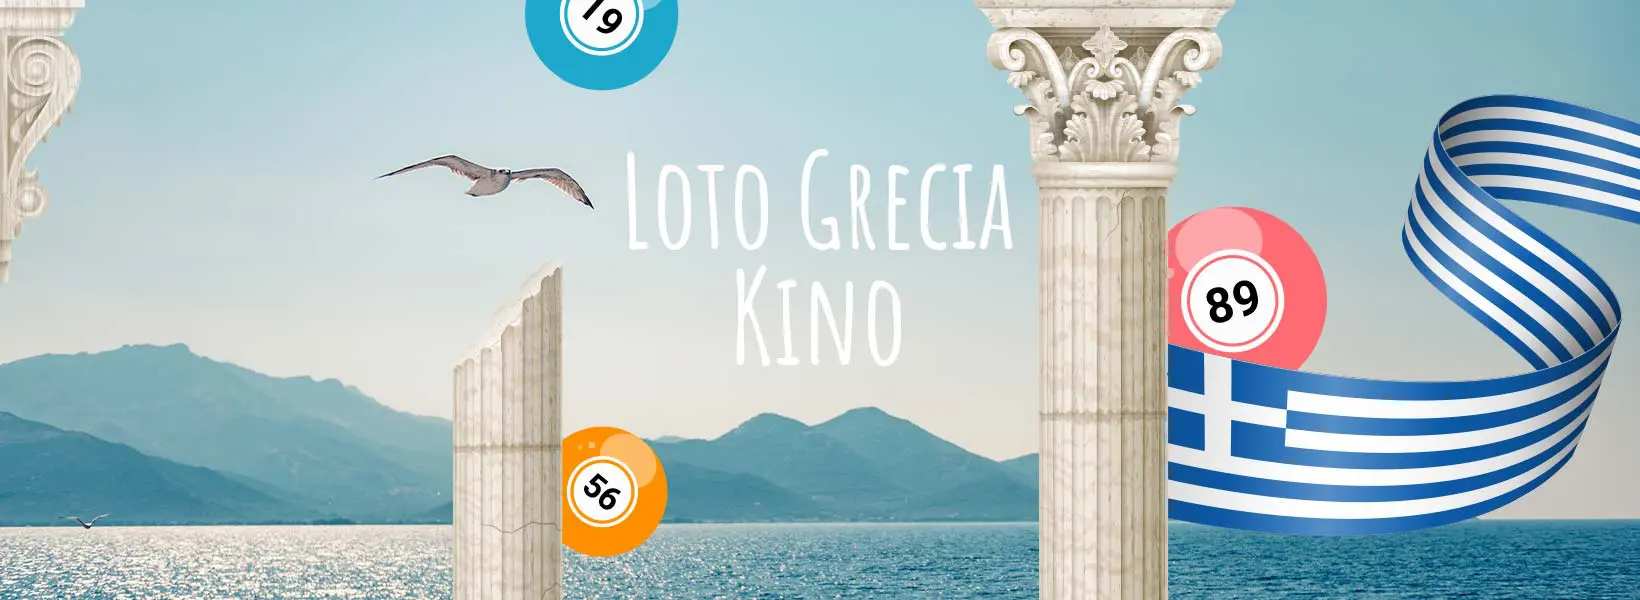 loto grecia kino logo